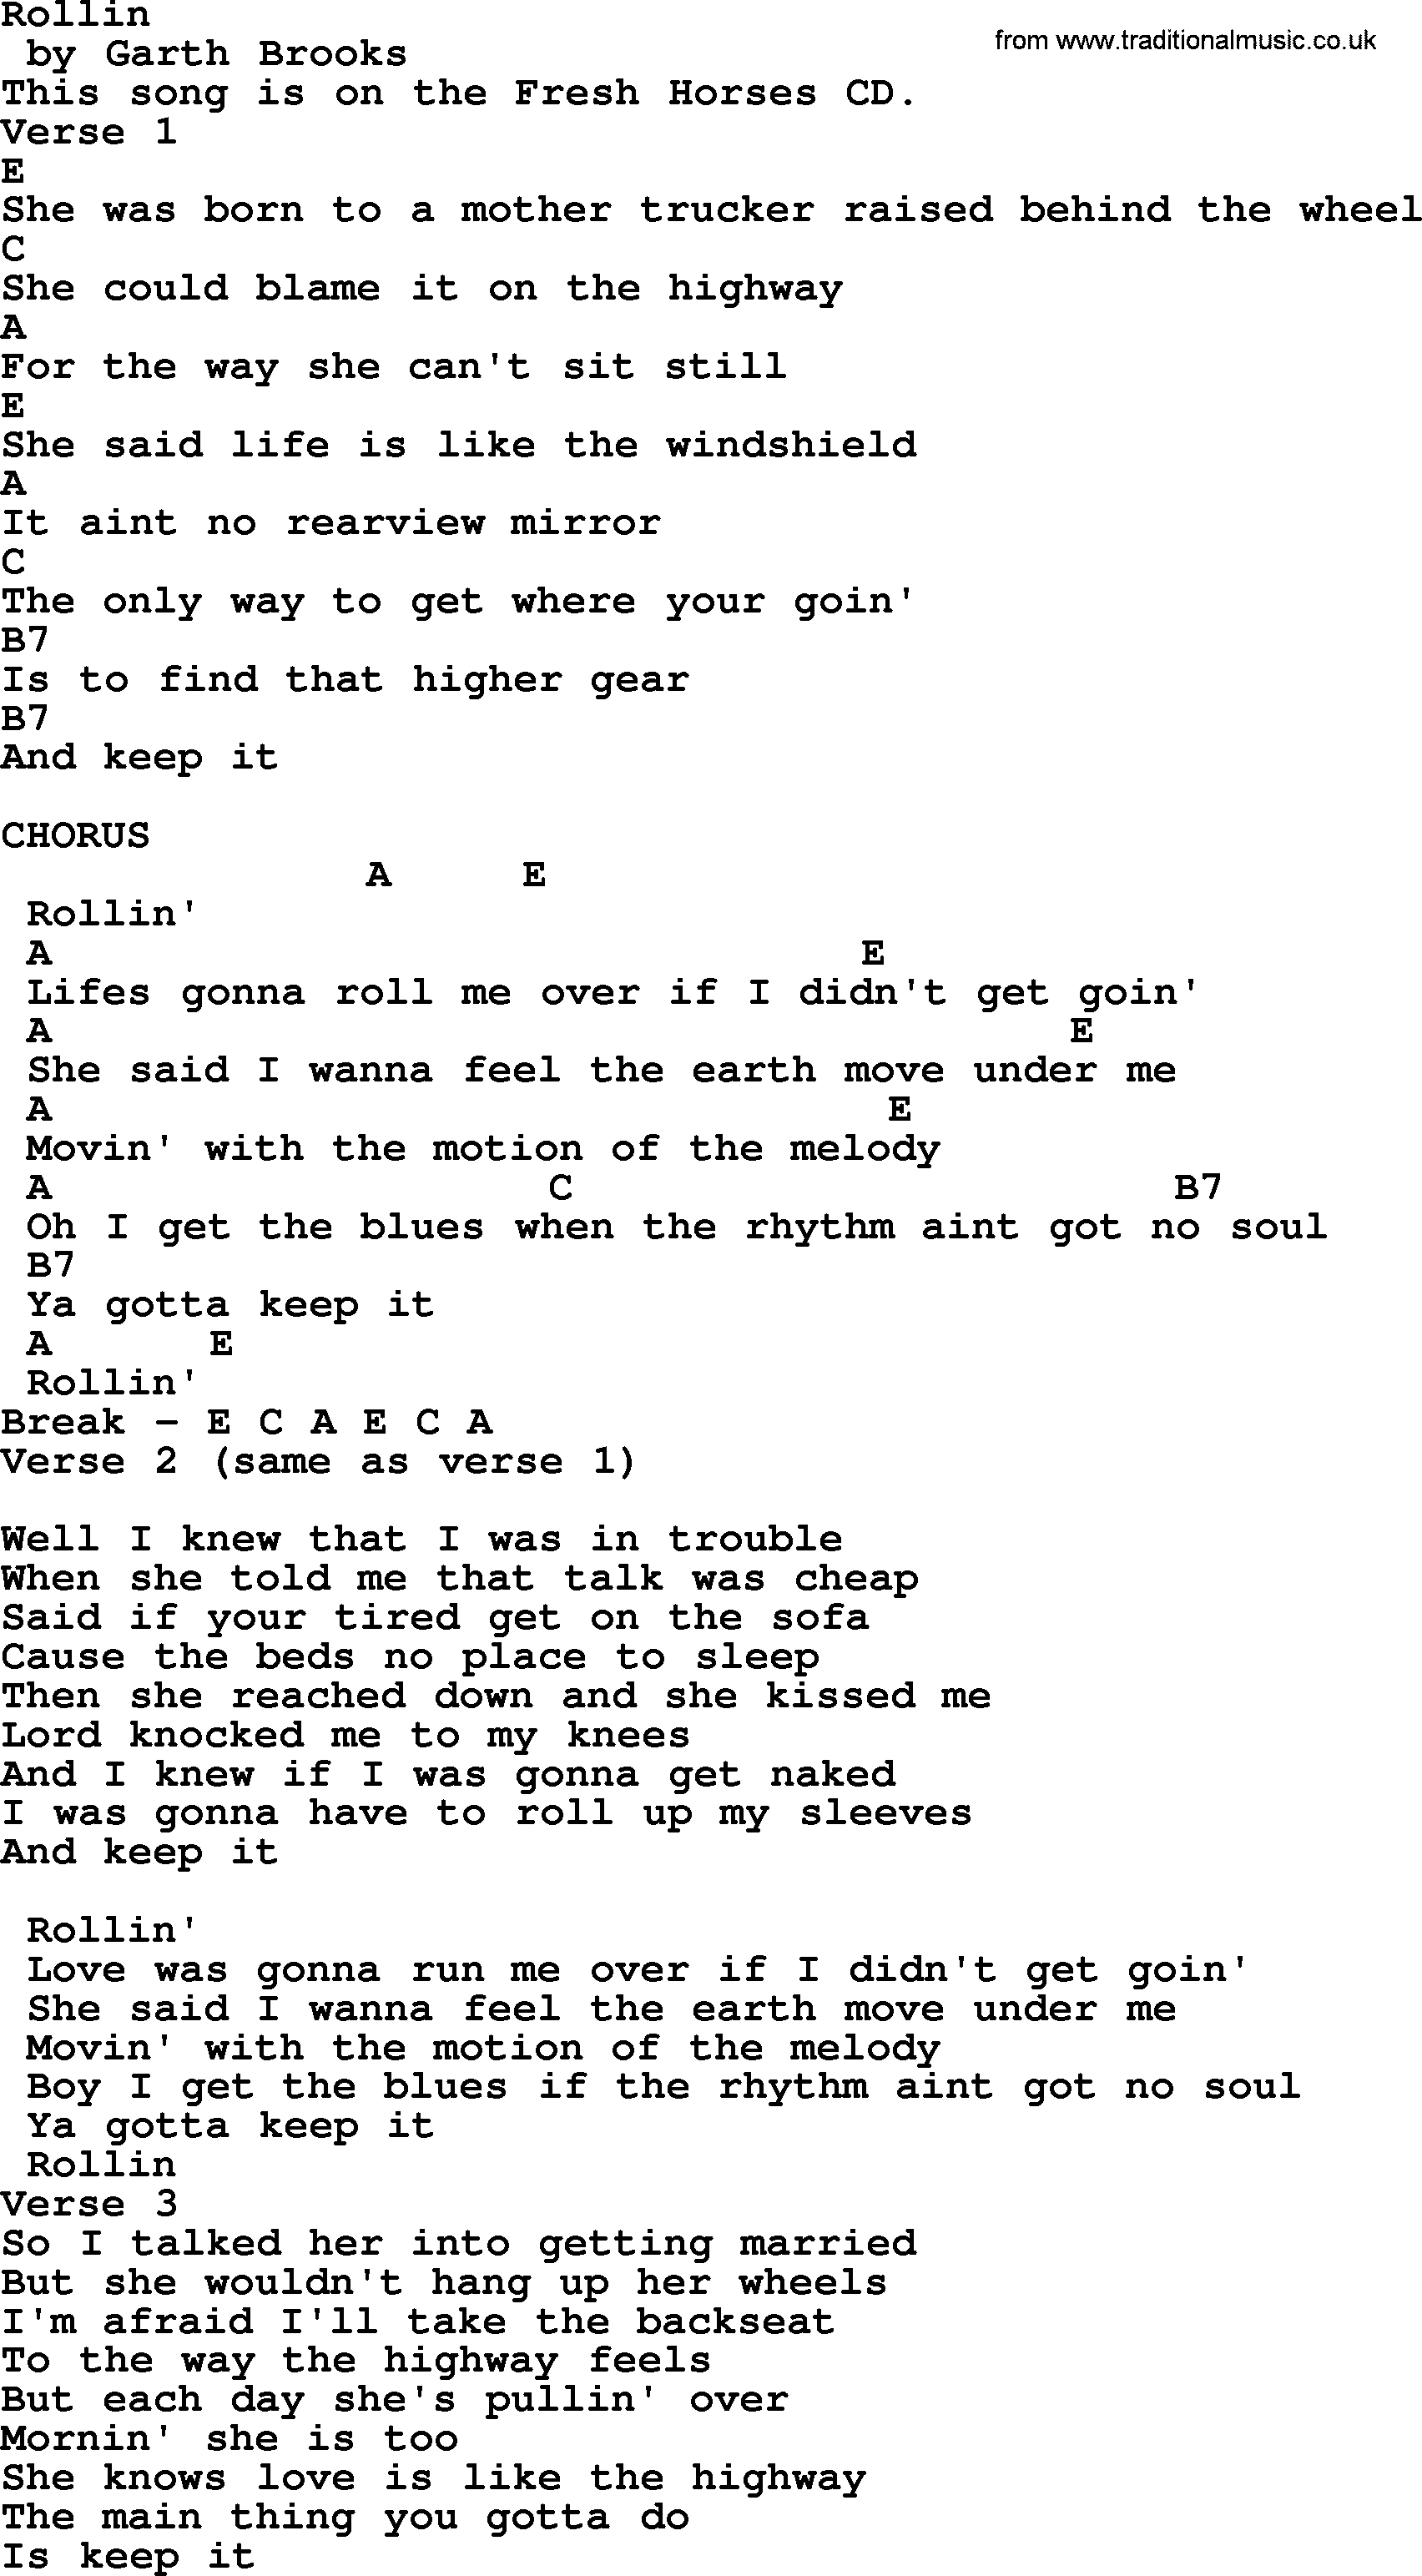 Garth Brooks song: Rollin, lyrics and chords